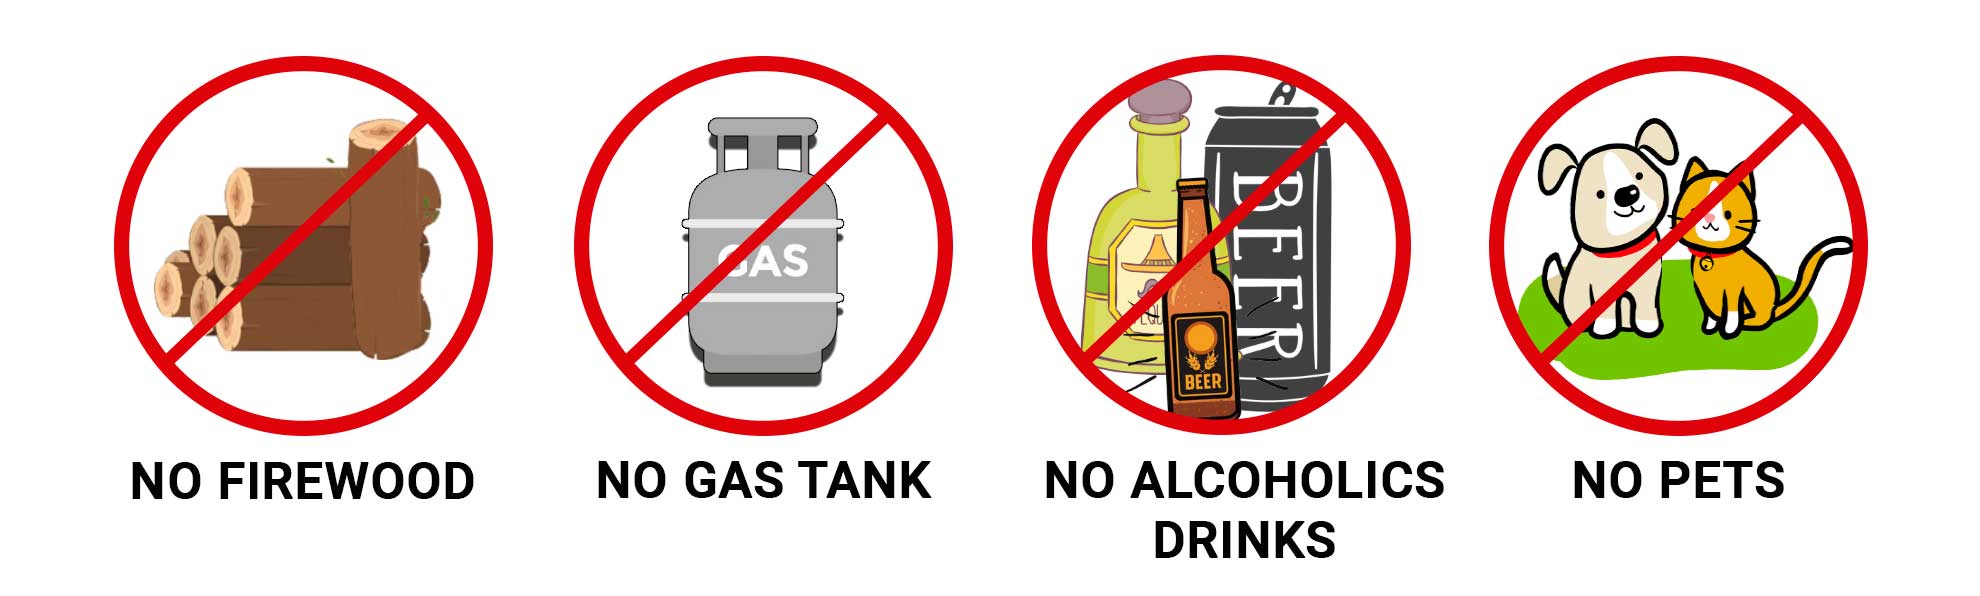 No Firewood, No Gas Tanks, No Alcoholics Drinks